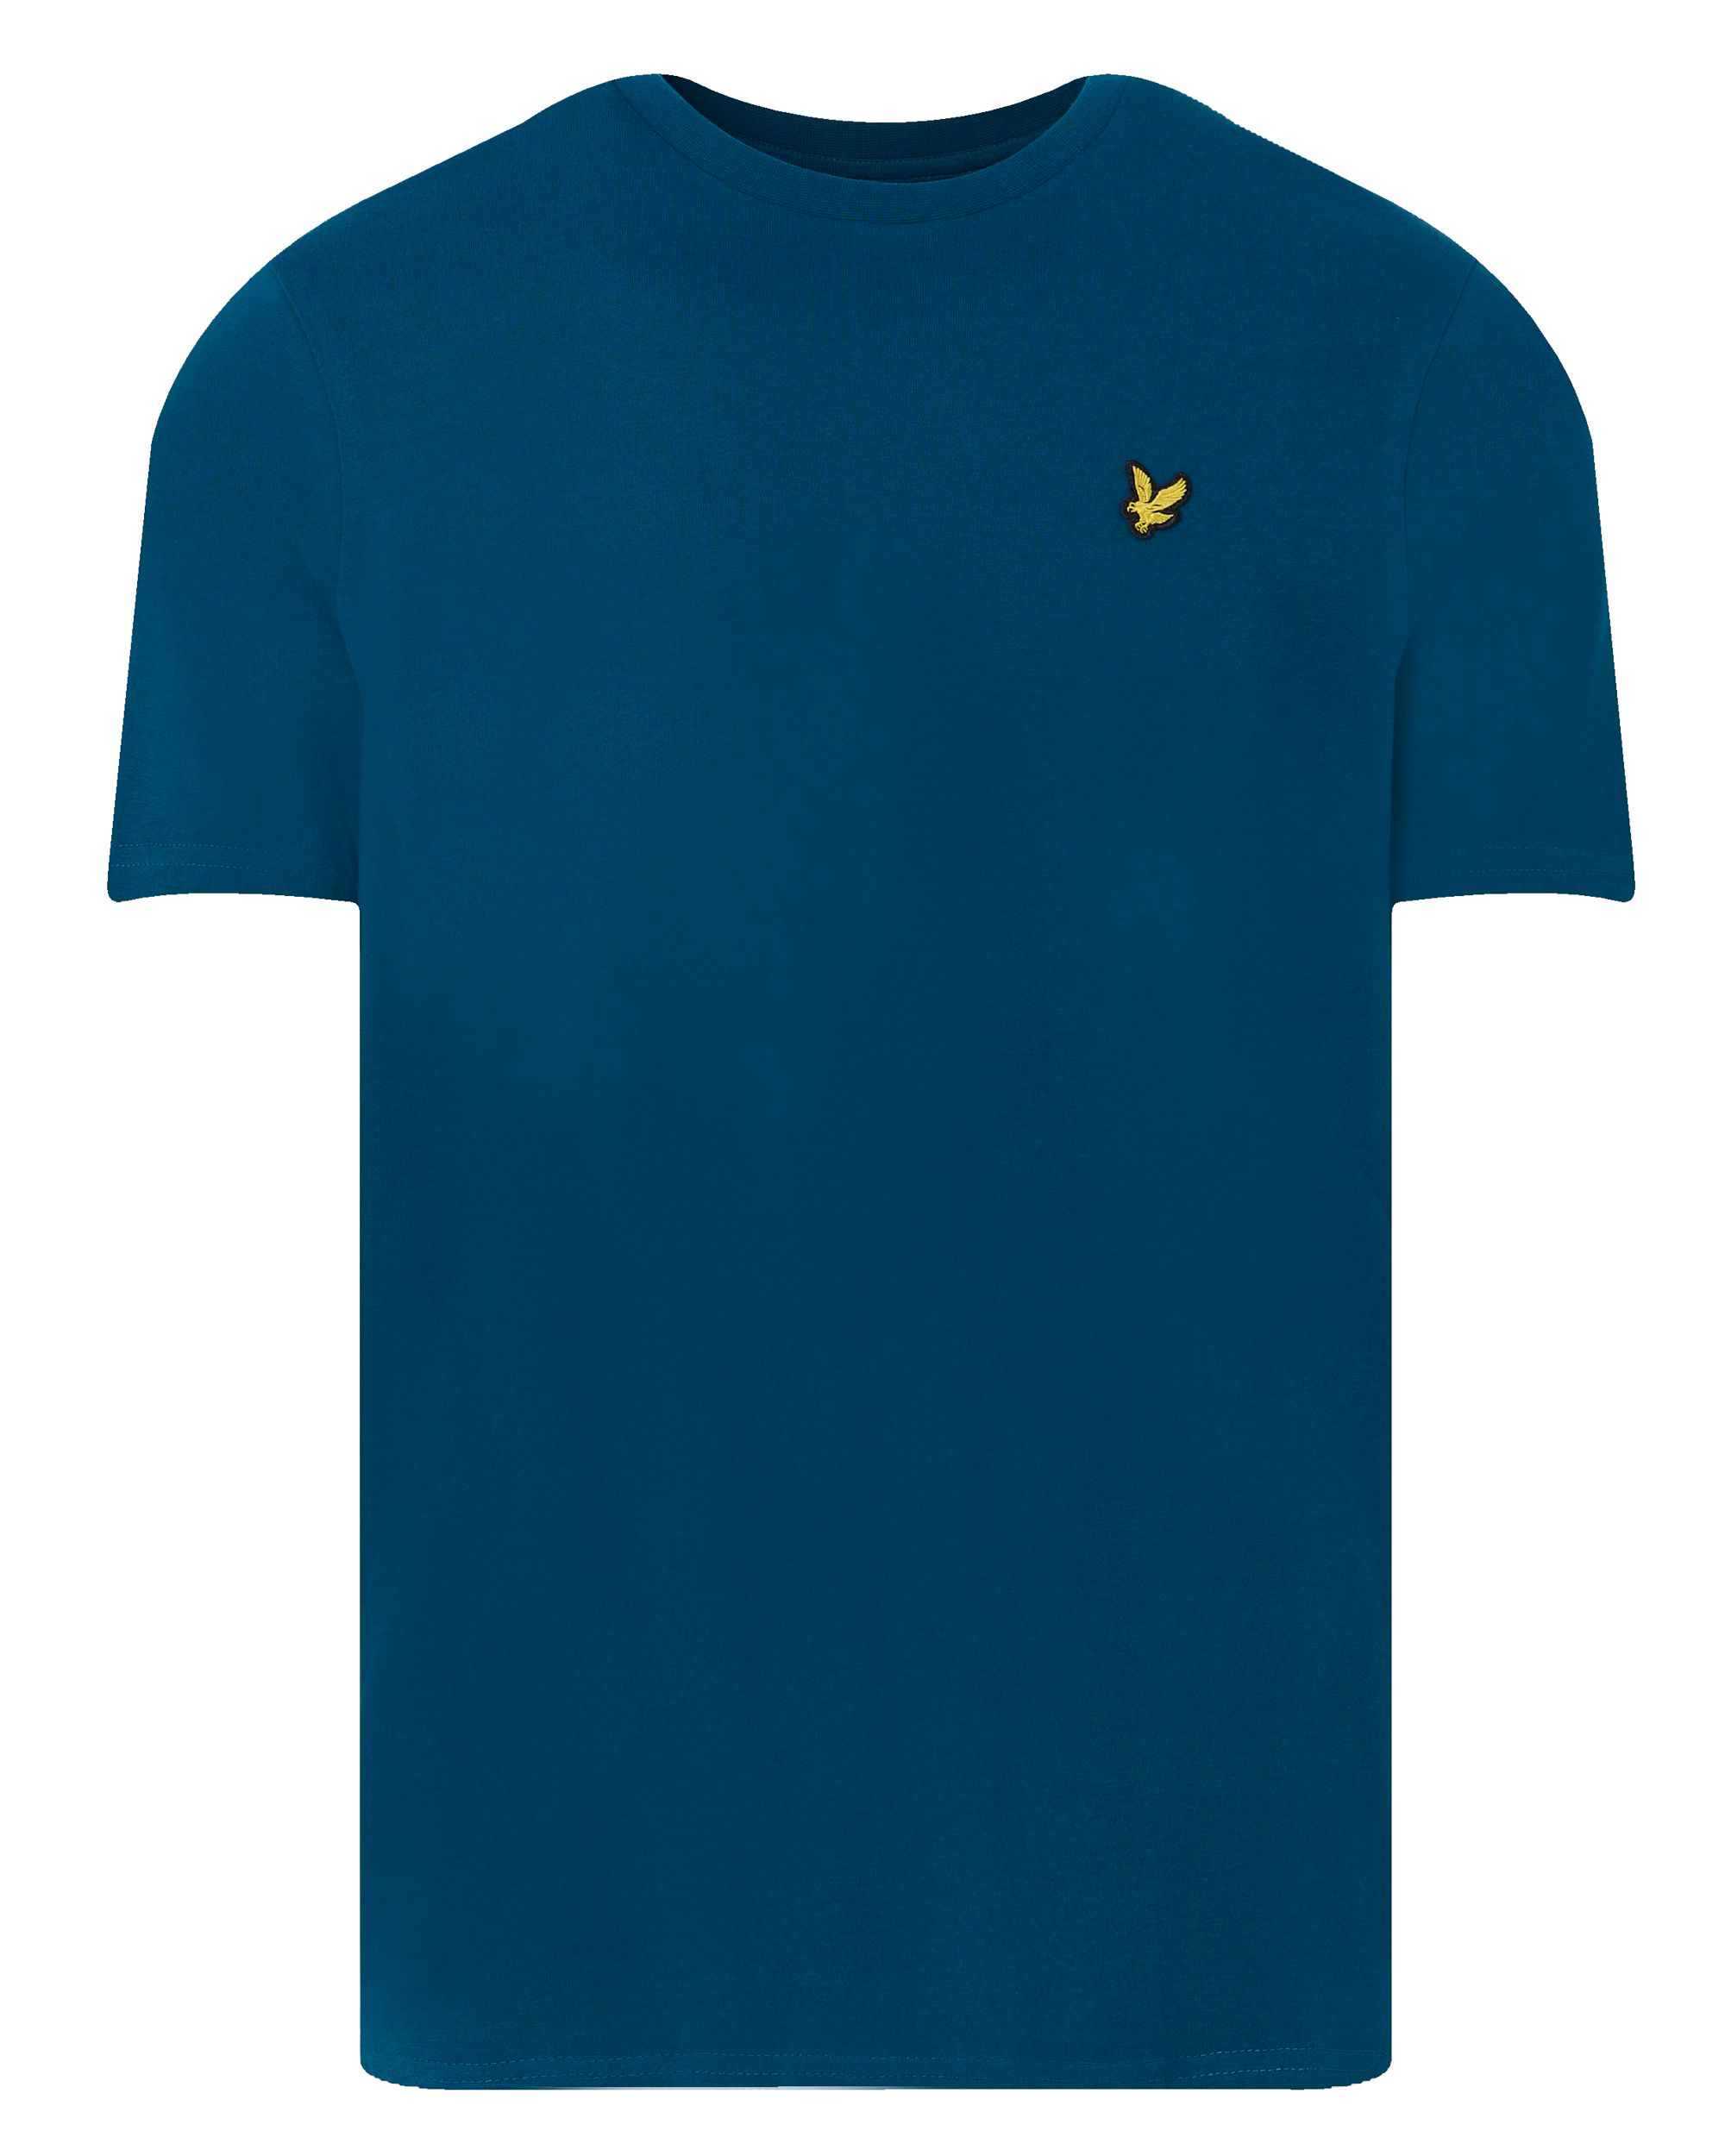 Lyle & Scott T-shirt KM Donker blauw 092271-002-L